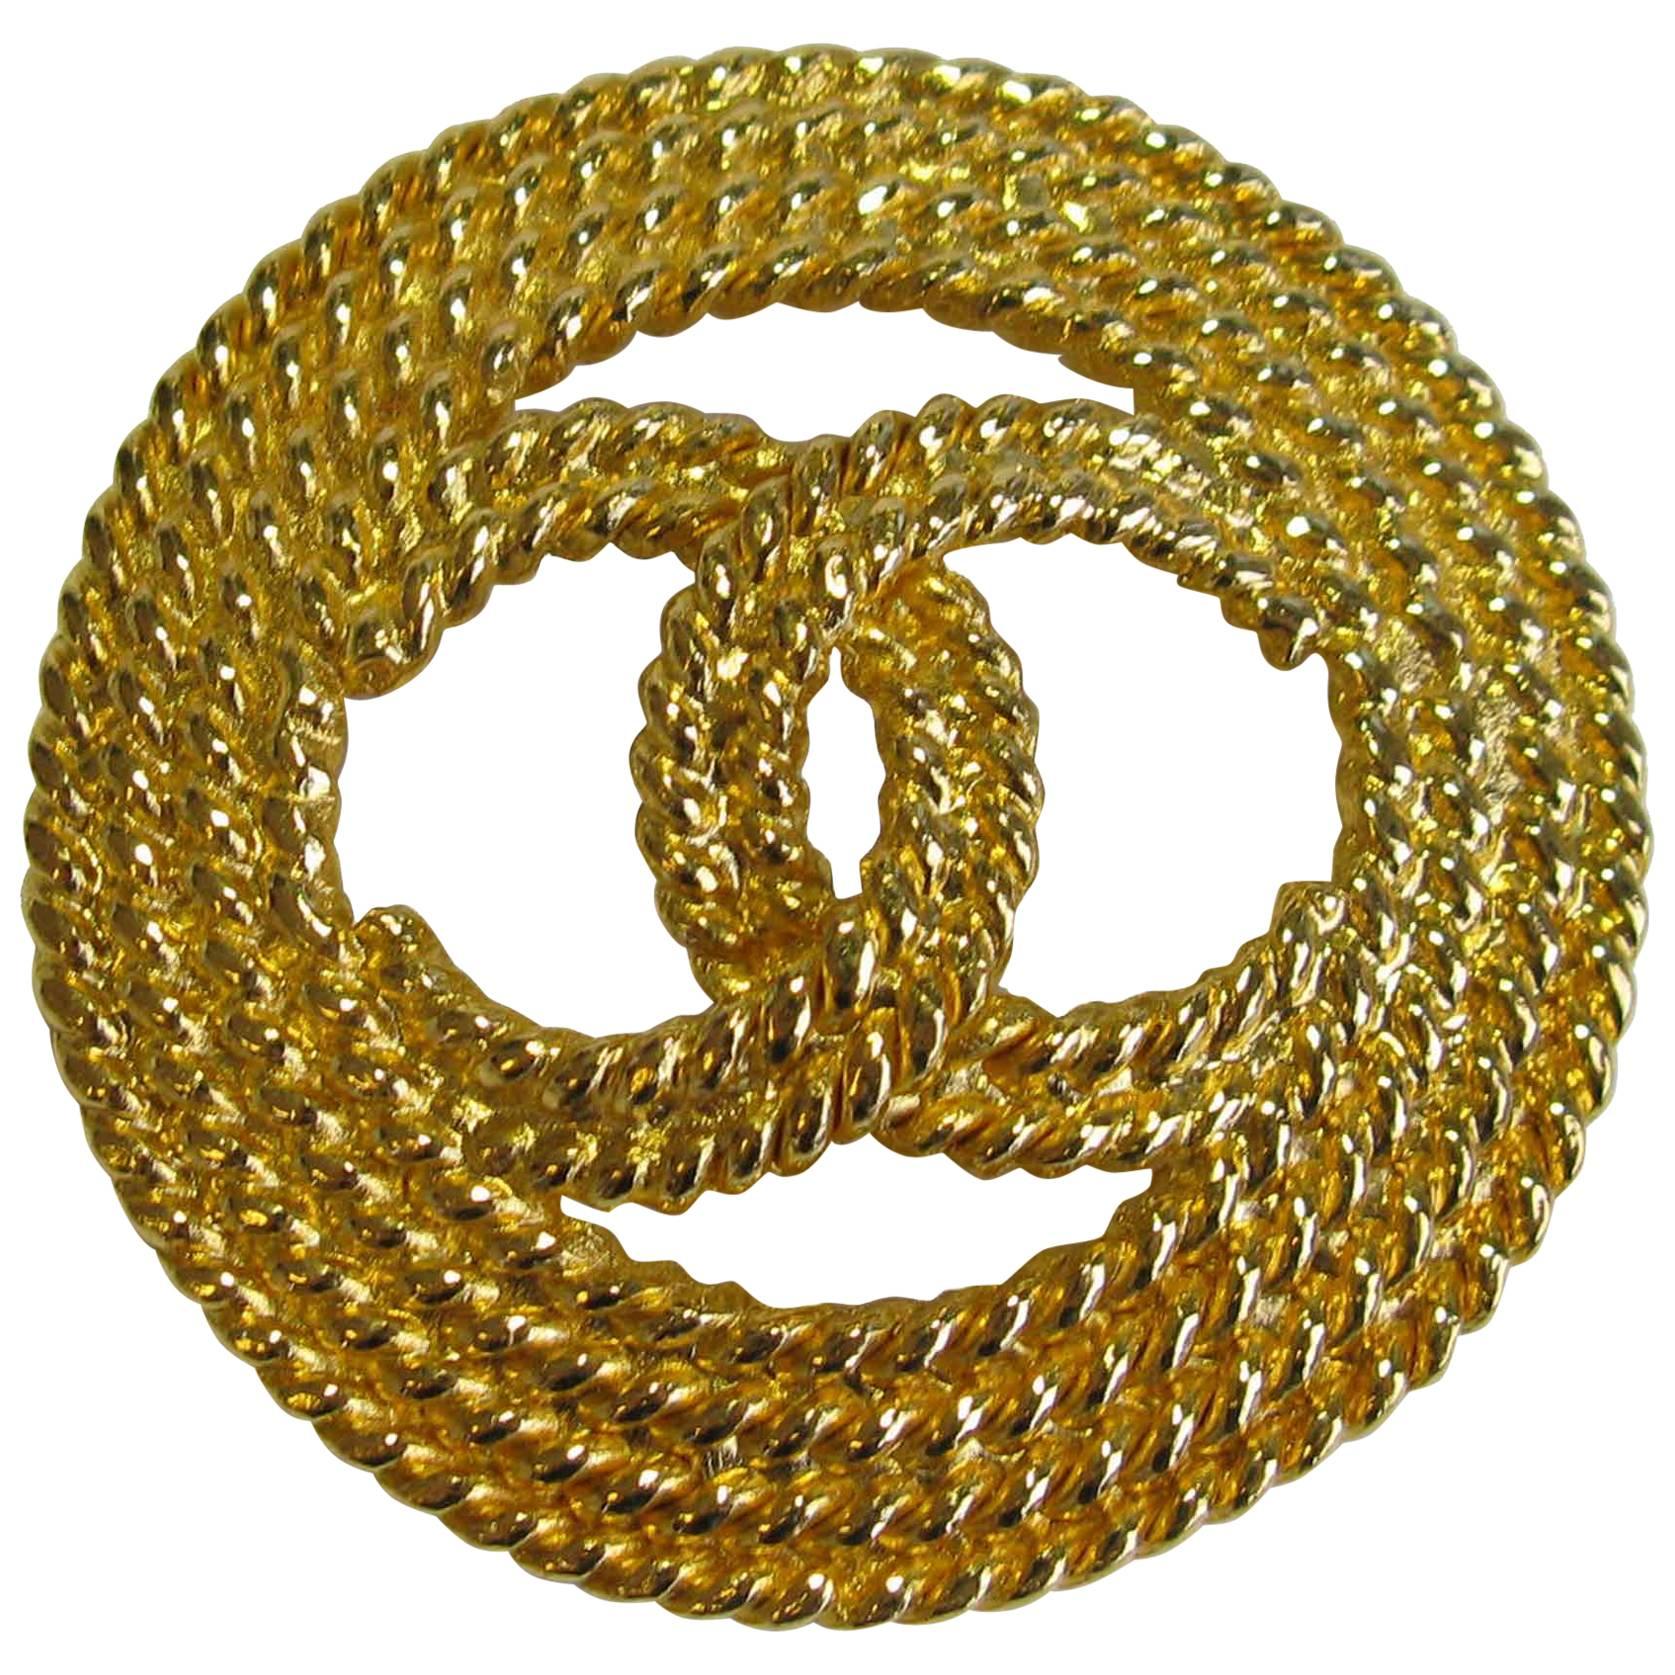 Chanel Vintage Round Brooch in Gilt Metal